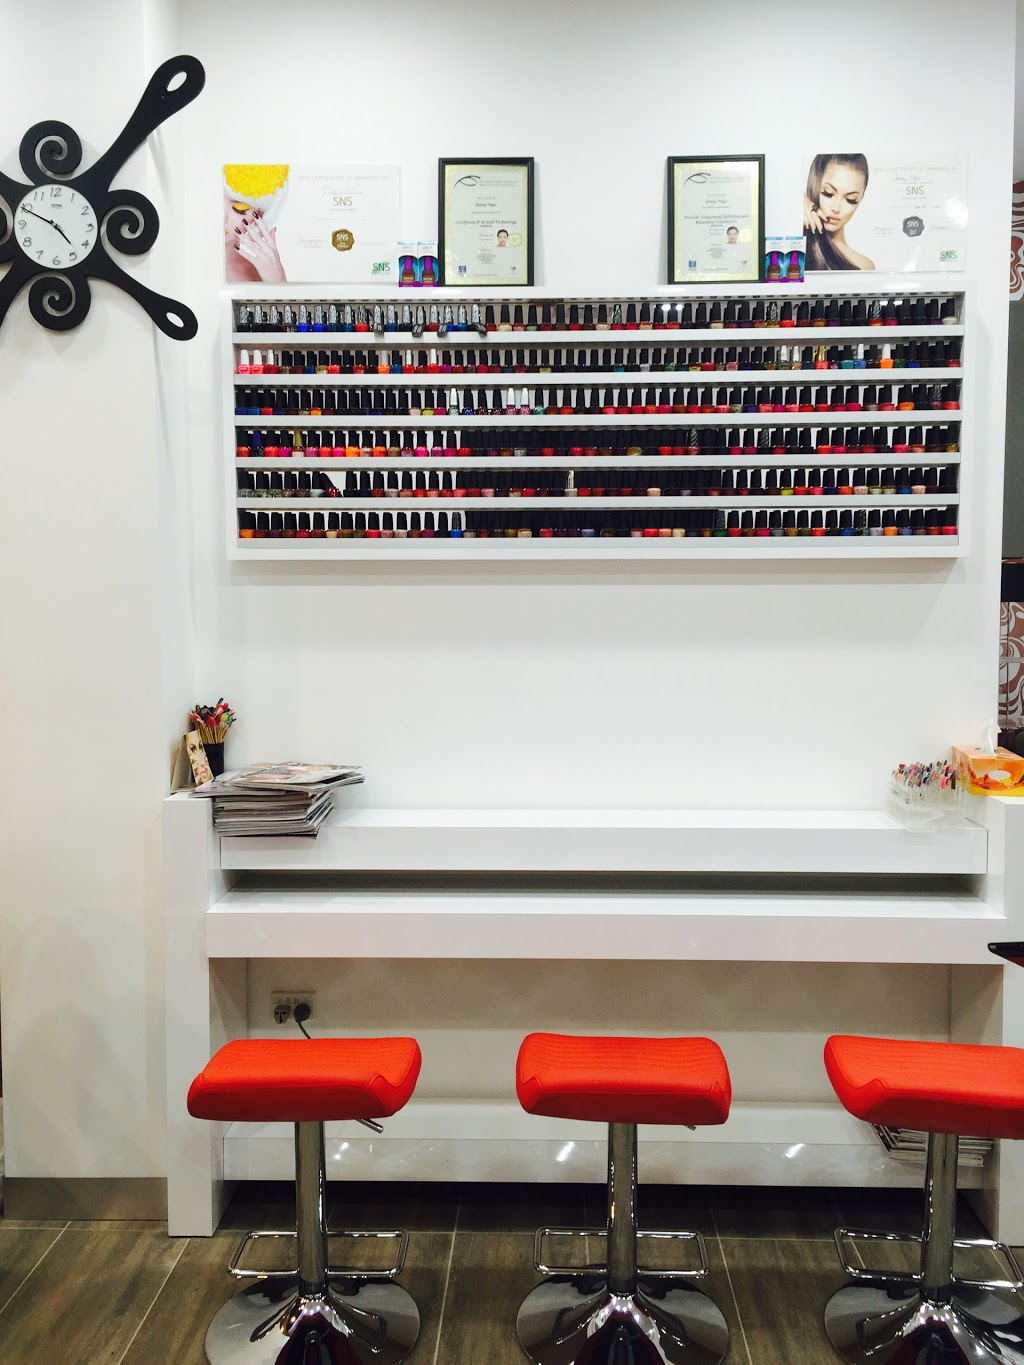 Classy Nails | beauty salon | Shop 1/187 Rocky Point Rd, Ramsgate NSW 2217, Australia | 0295839198 OR +61 2 9583 9198